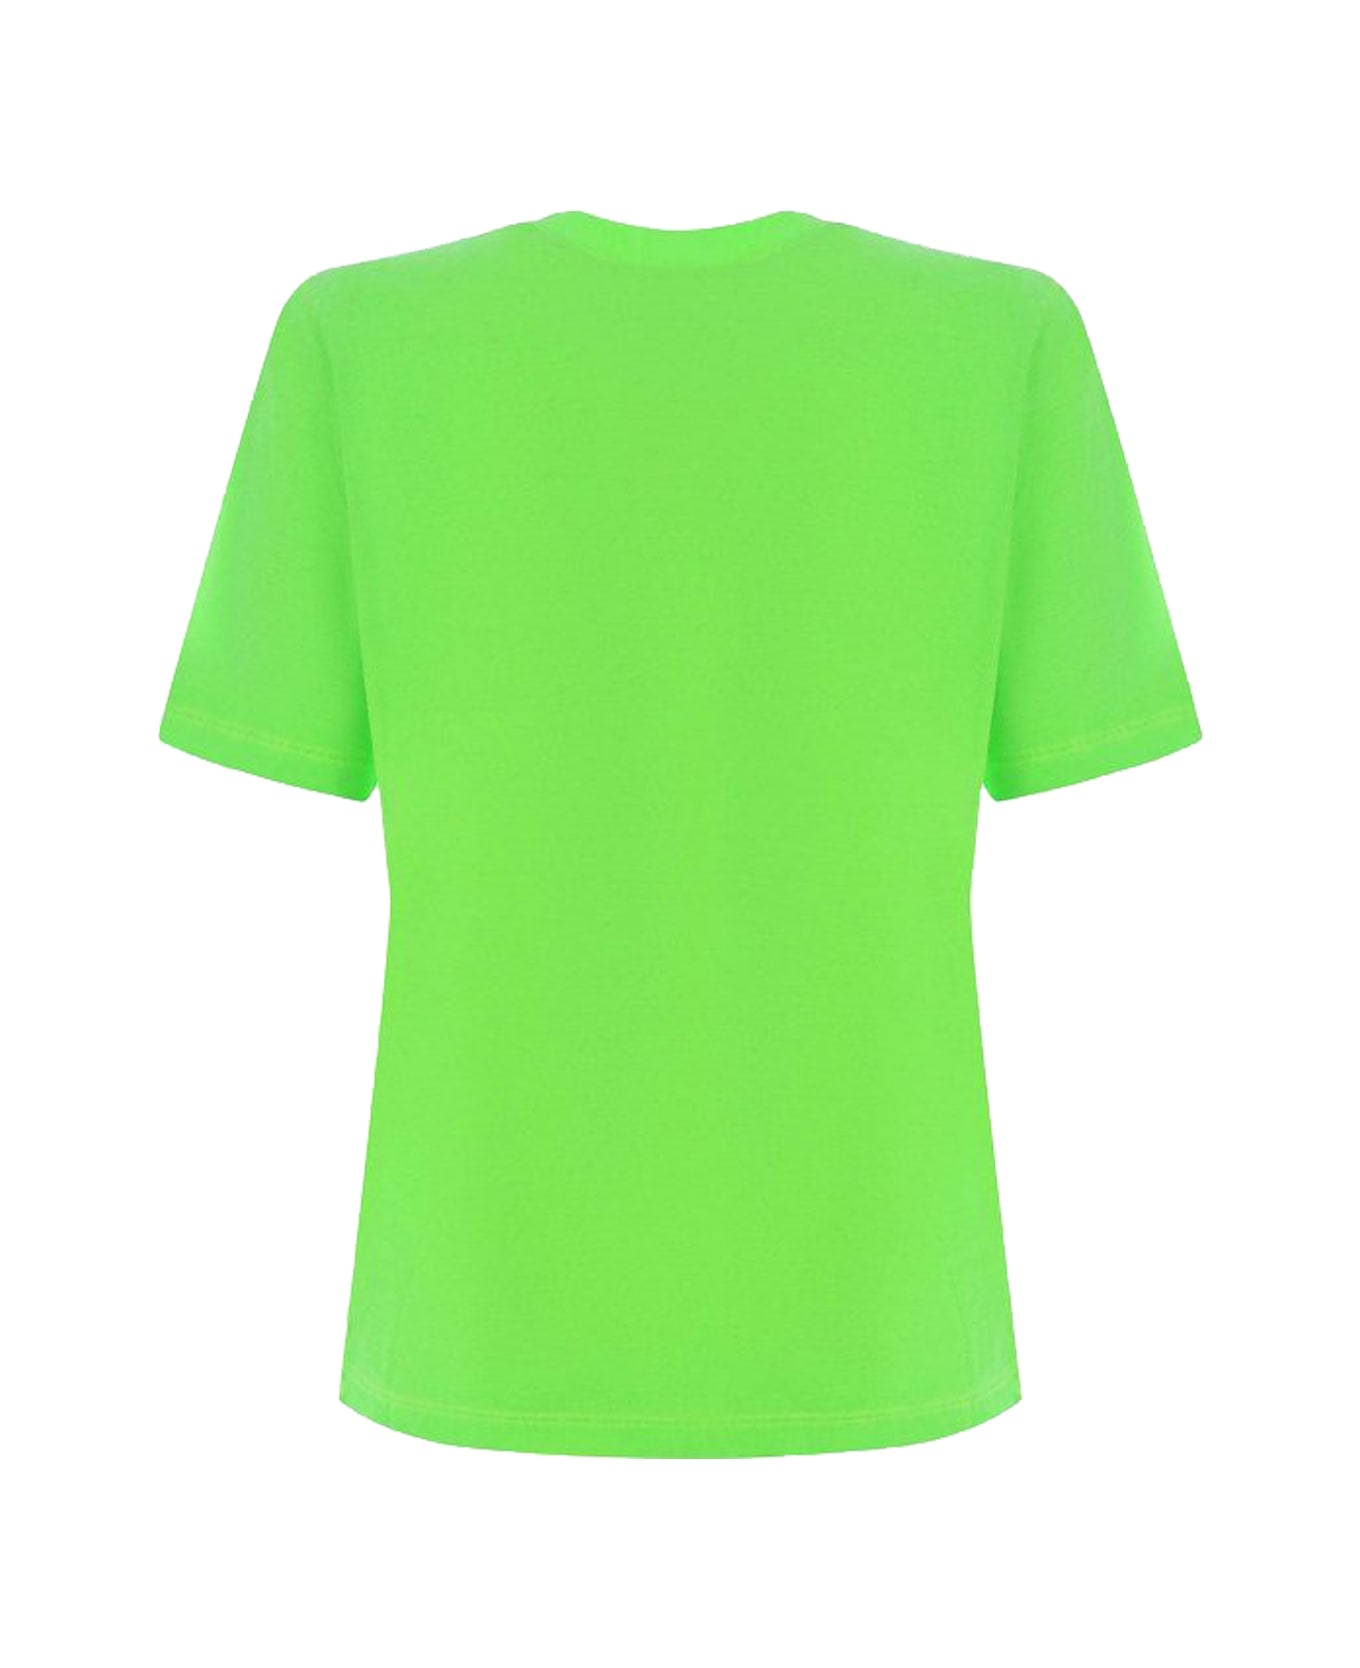 Dsquared2 T-shirt - Green